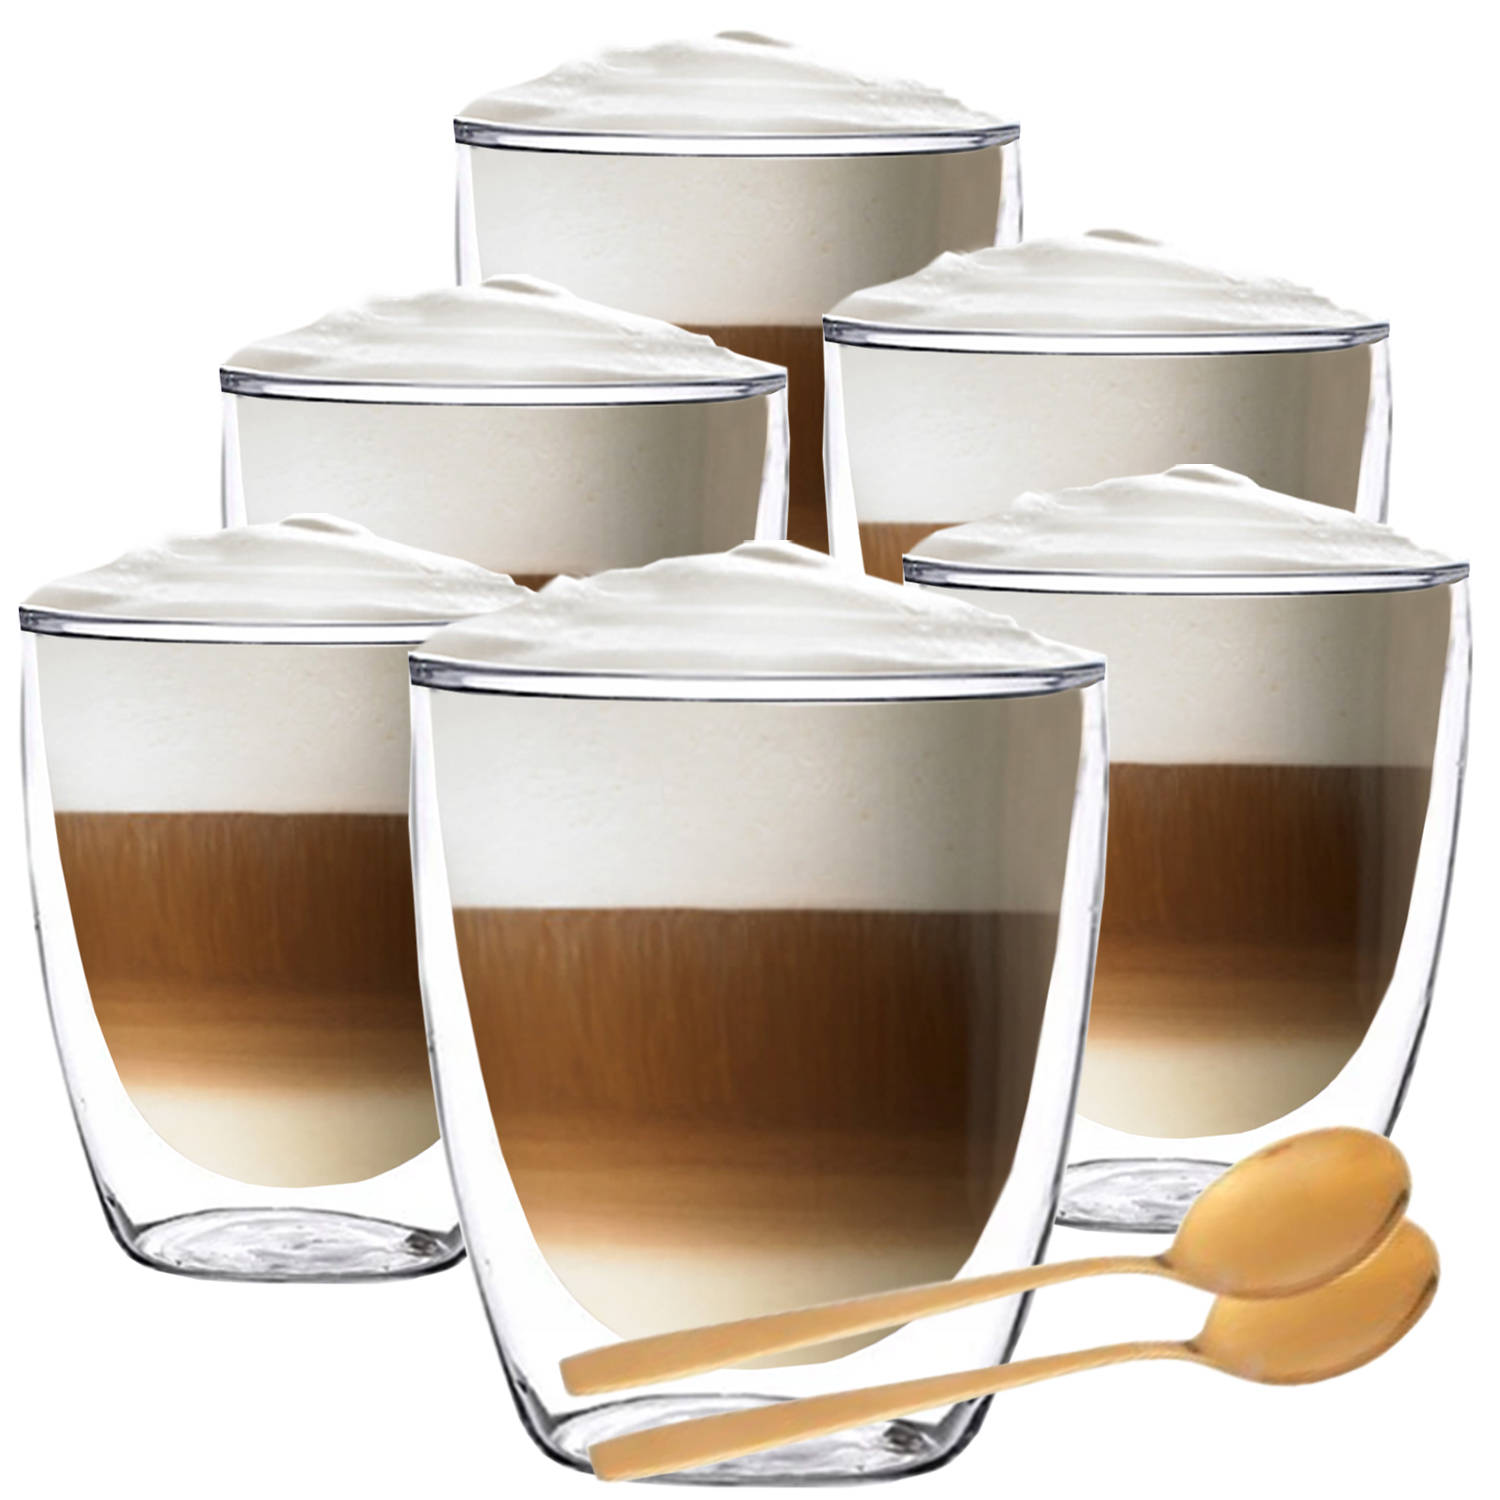 Dubbelwandige Koffieglazen - Cappuccino Glazen - Dubbelwandige Theeglazen - 300ML - 6x - Gratis Lepels